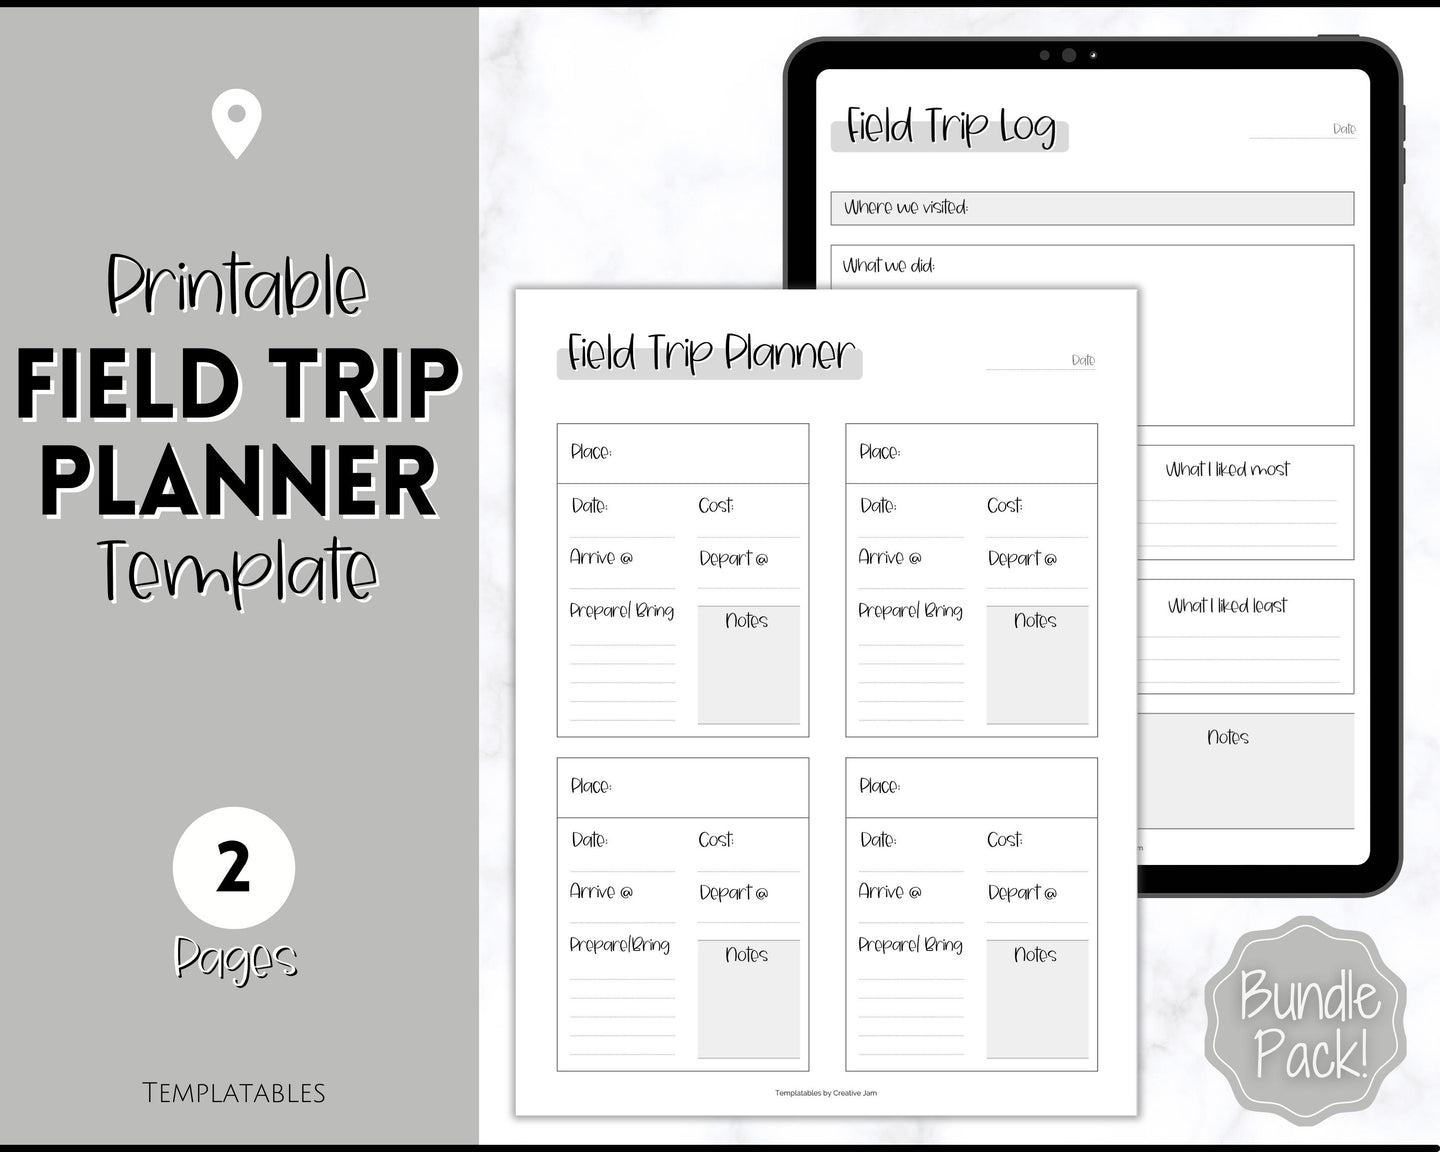 Field Trip Planner BUNDLE - Printable Field Trip Log | Classroom & Field Trip Journal | Mono